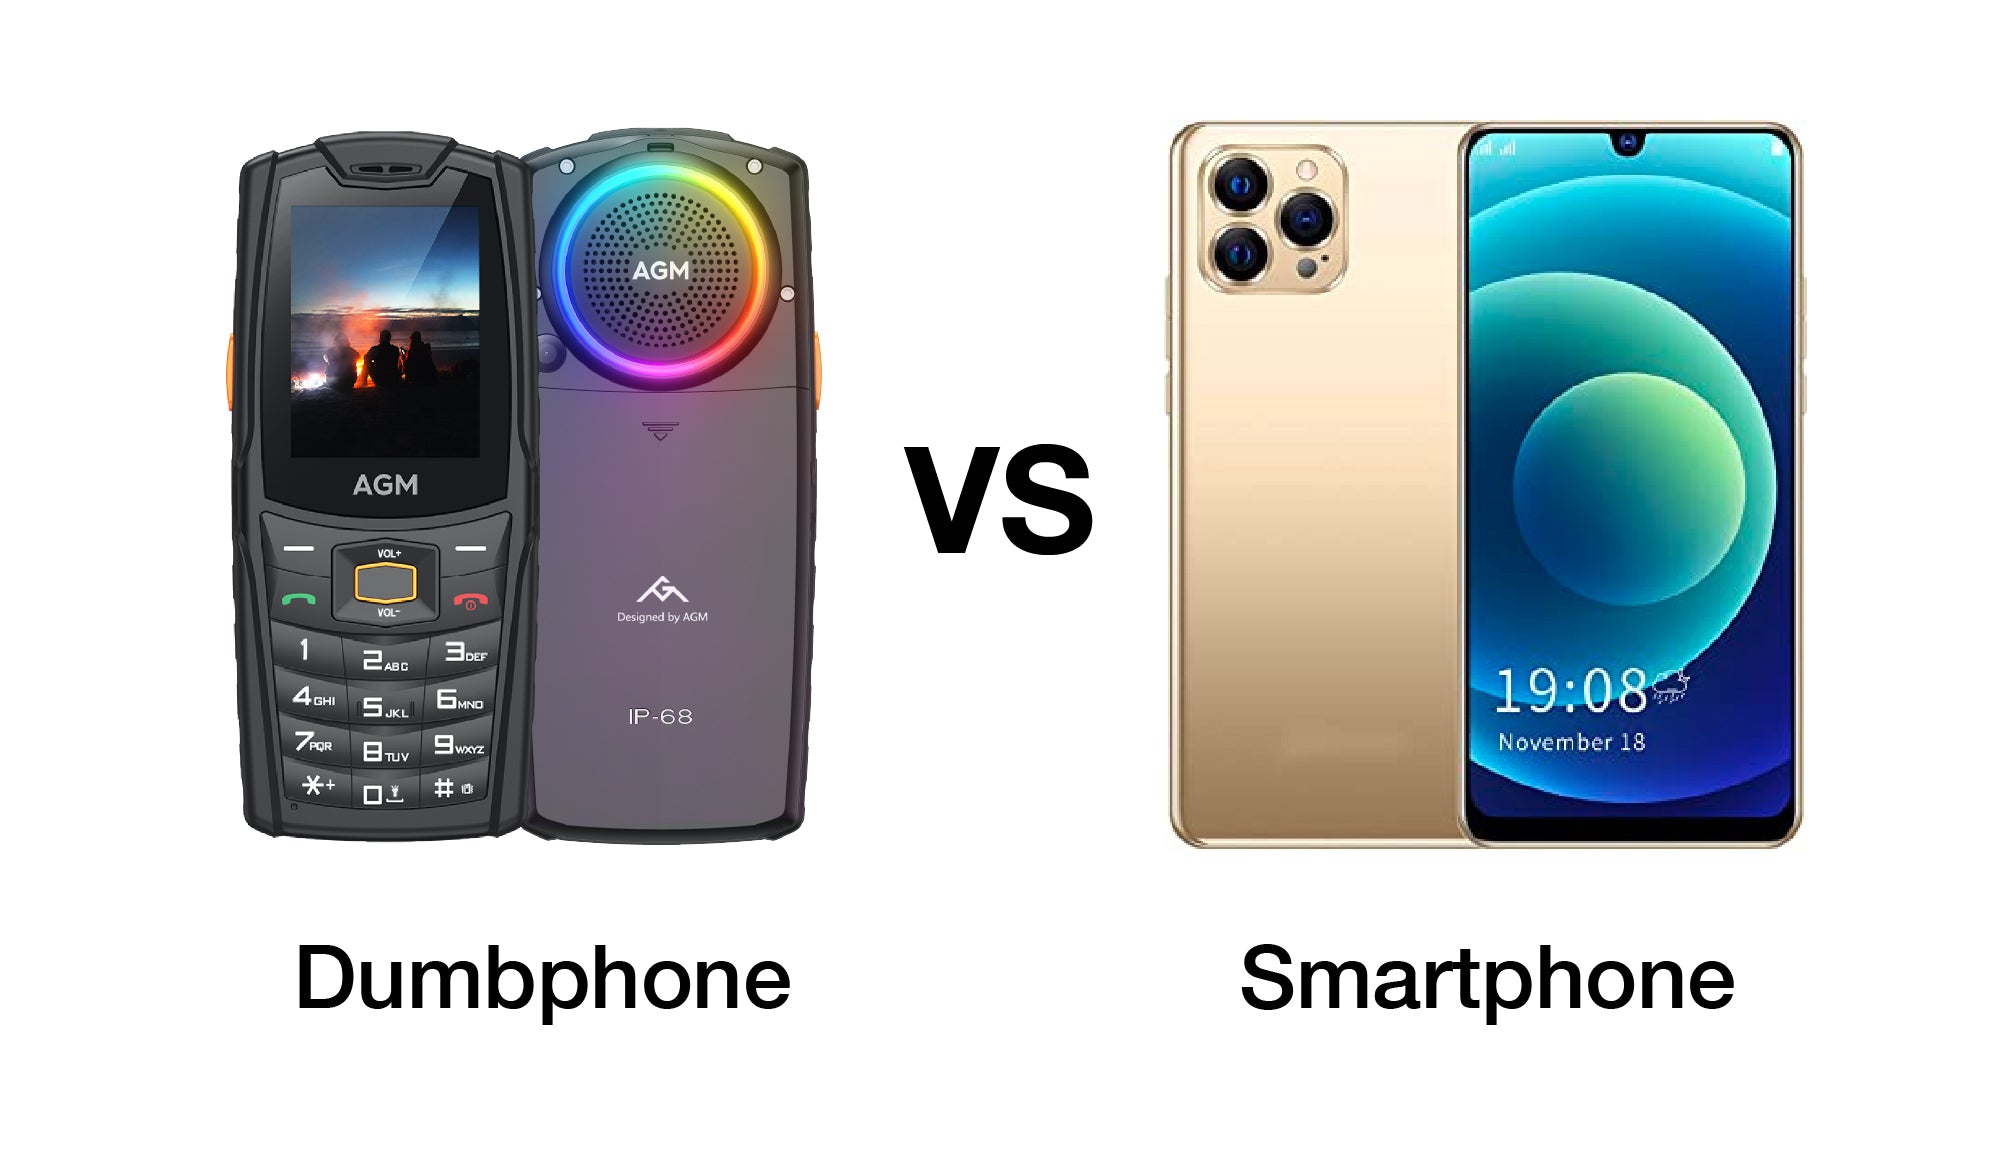 Dumbphone or Smartphone?